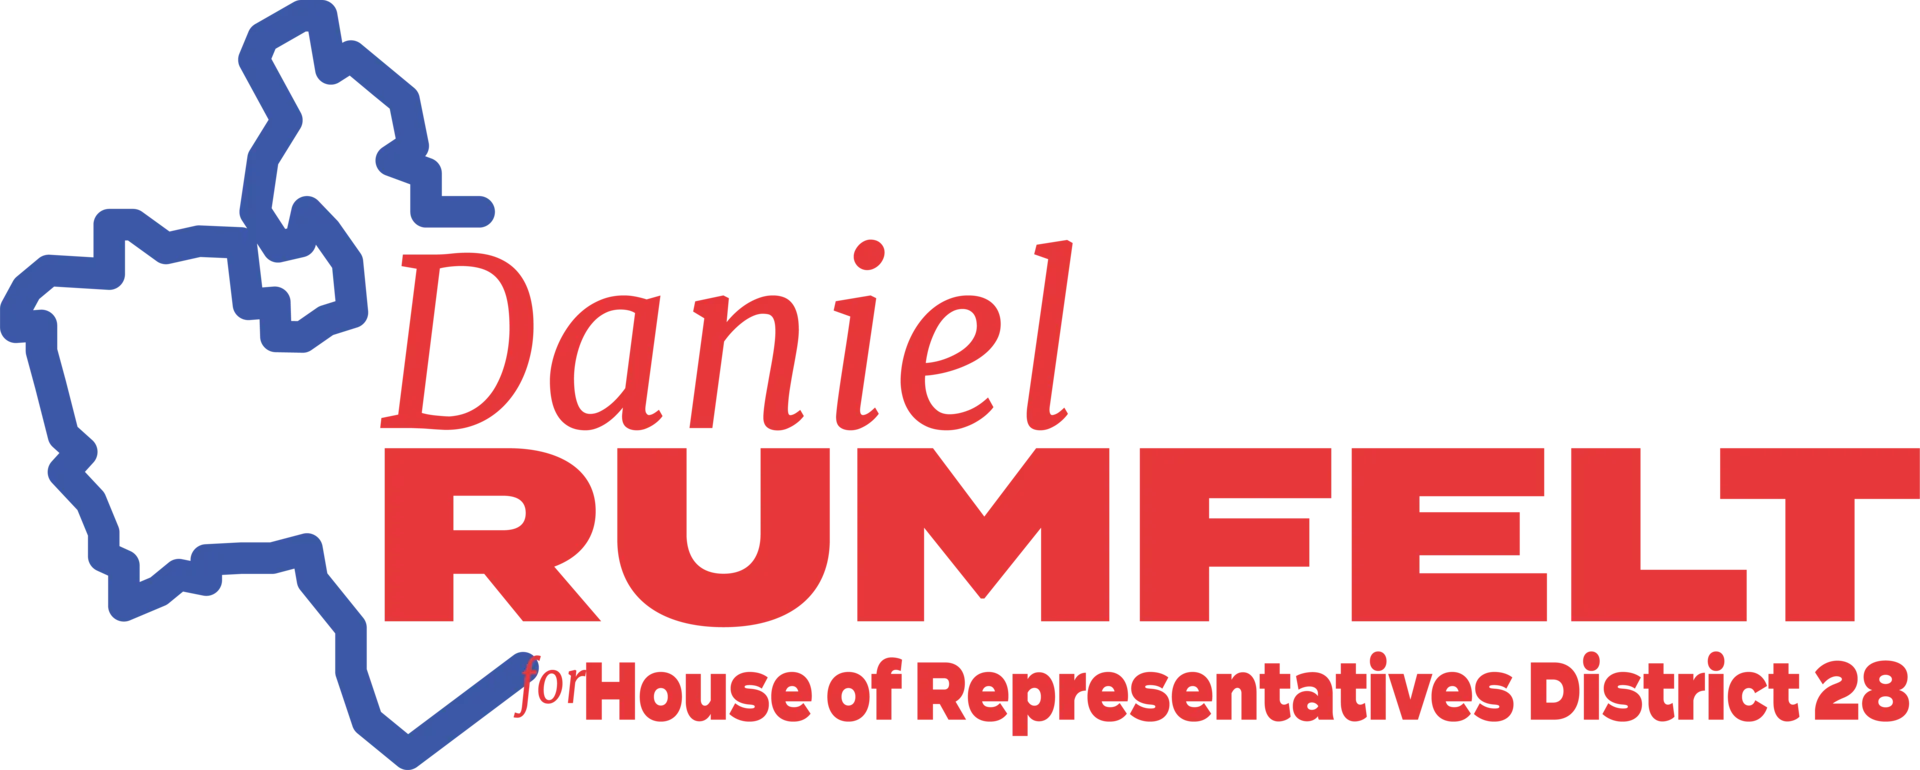 Daniel Rumfelt for S.C. House of Representatives District 28